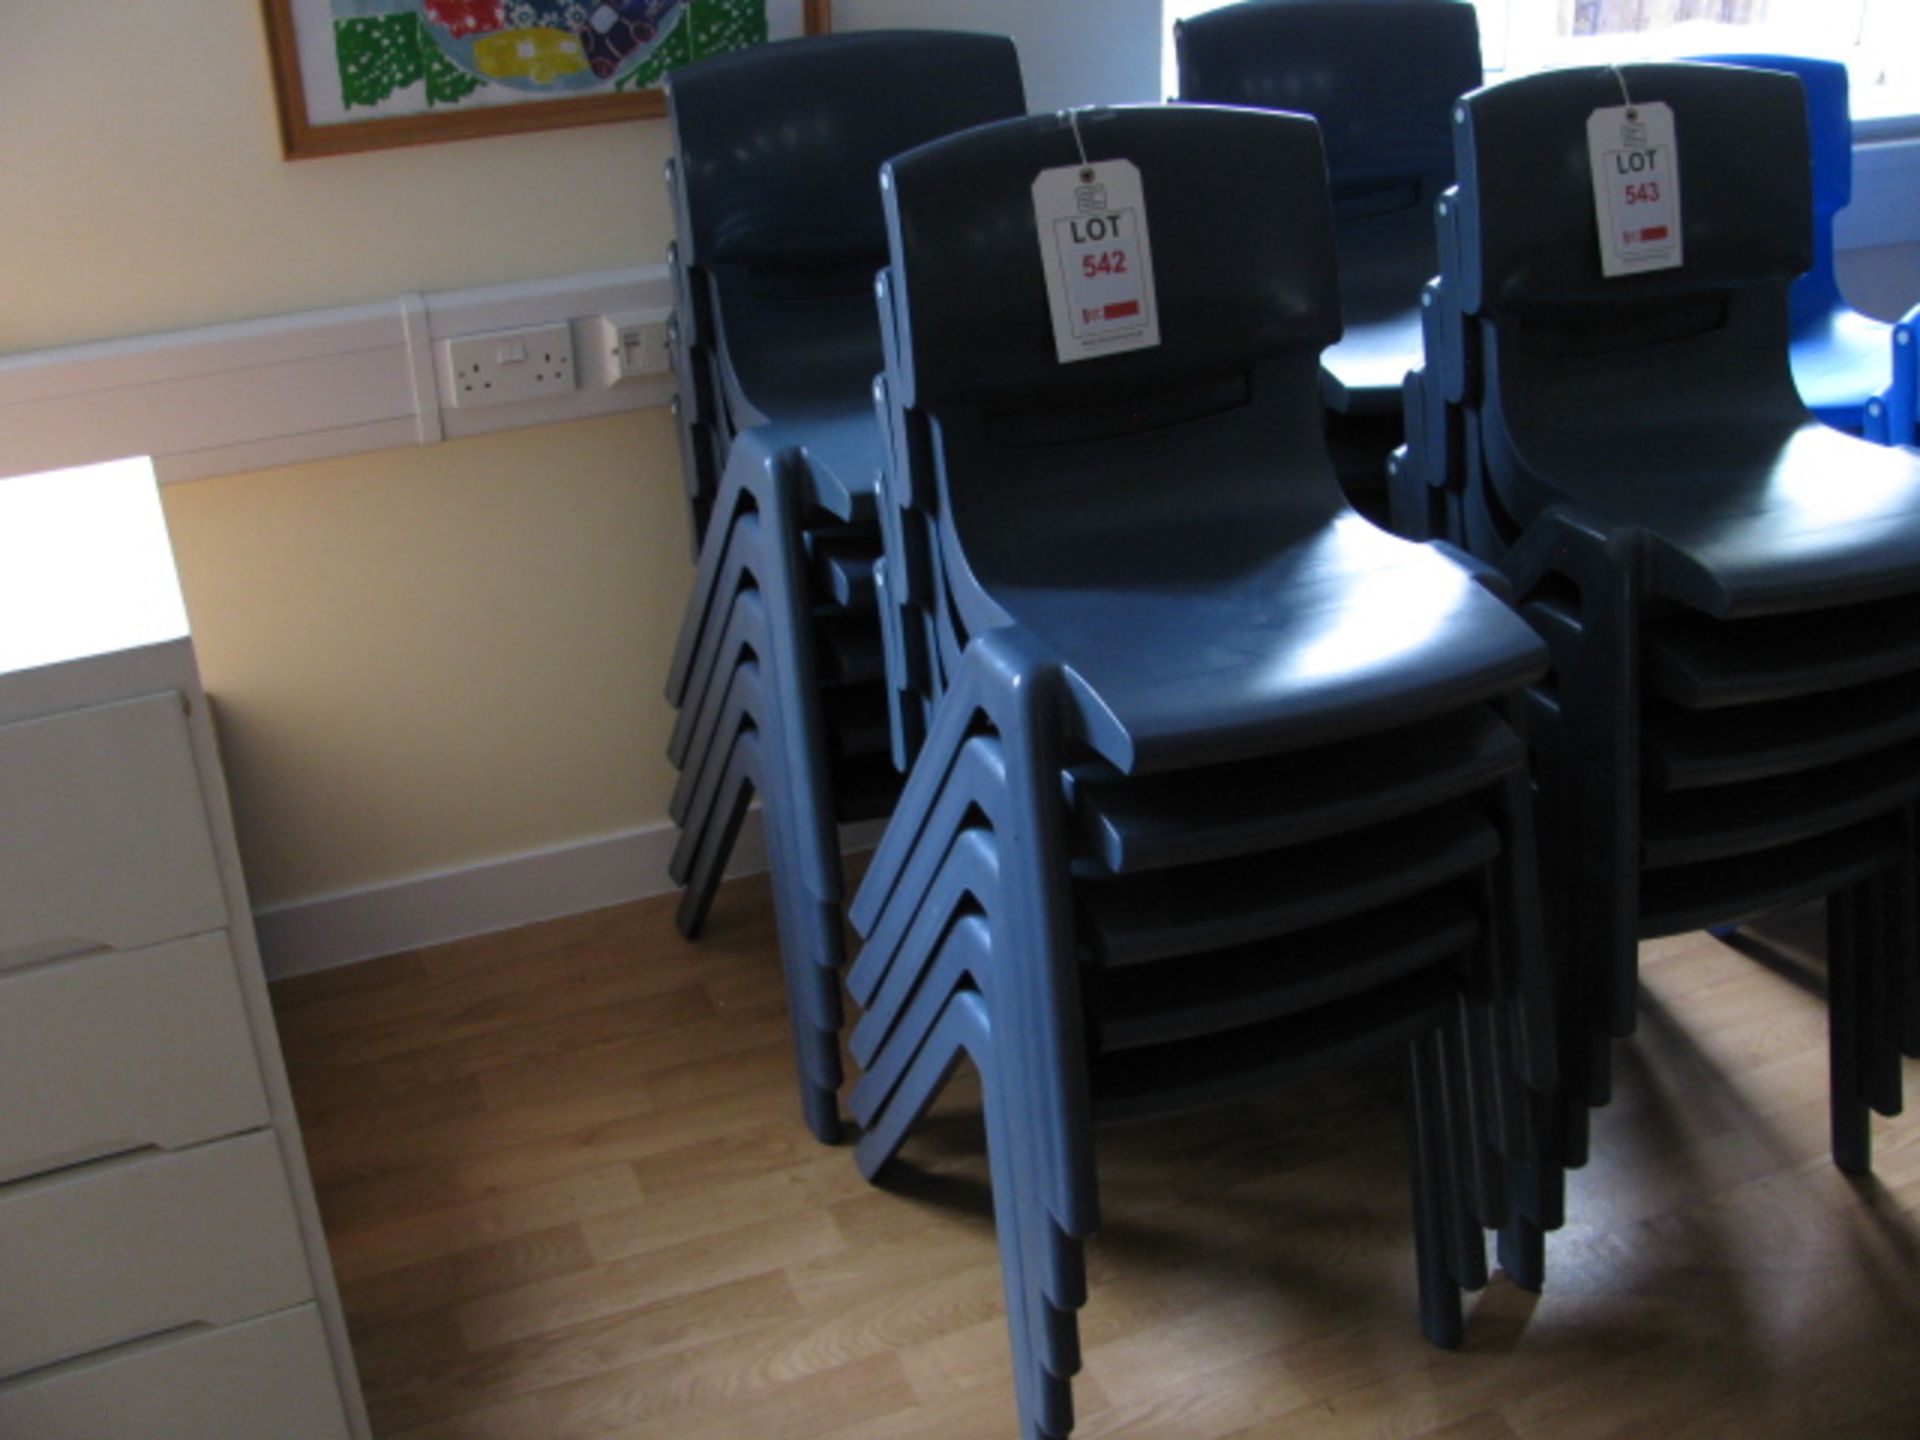 Ten Sebel Postura dark blue plastic chairs